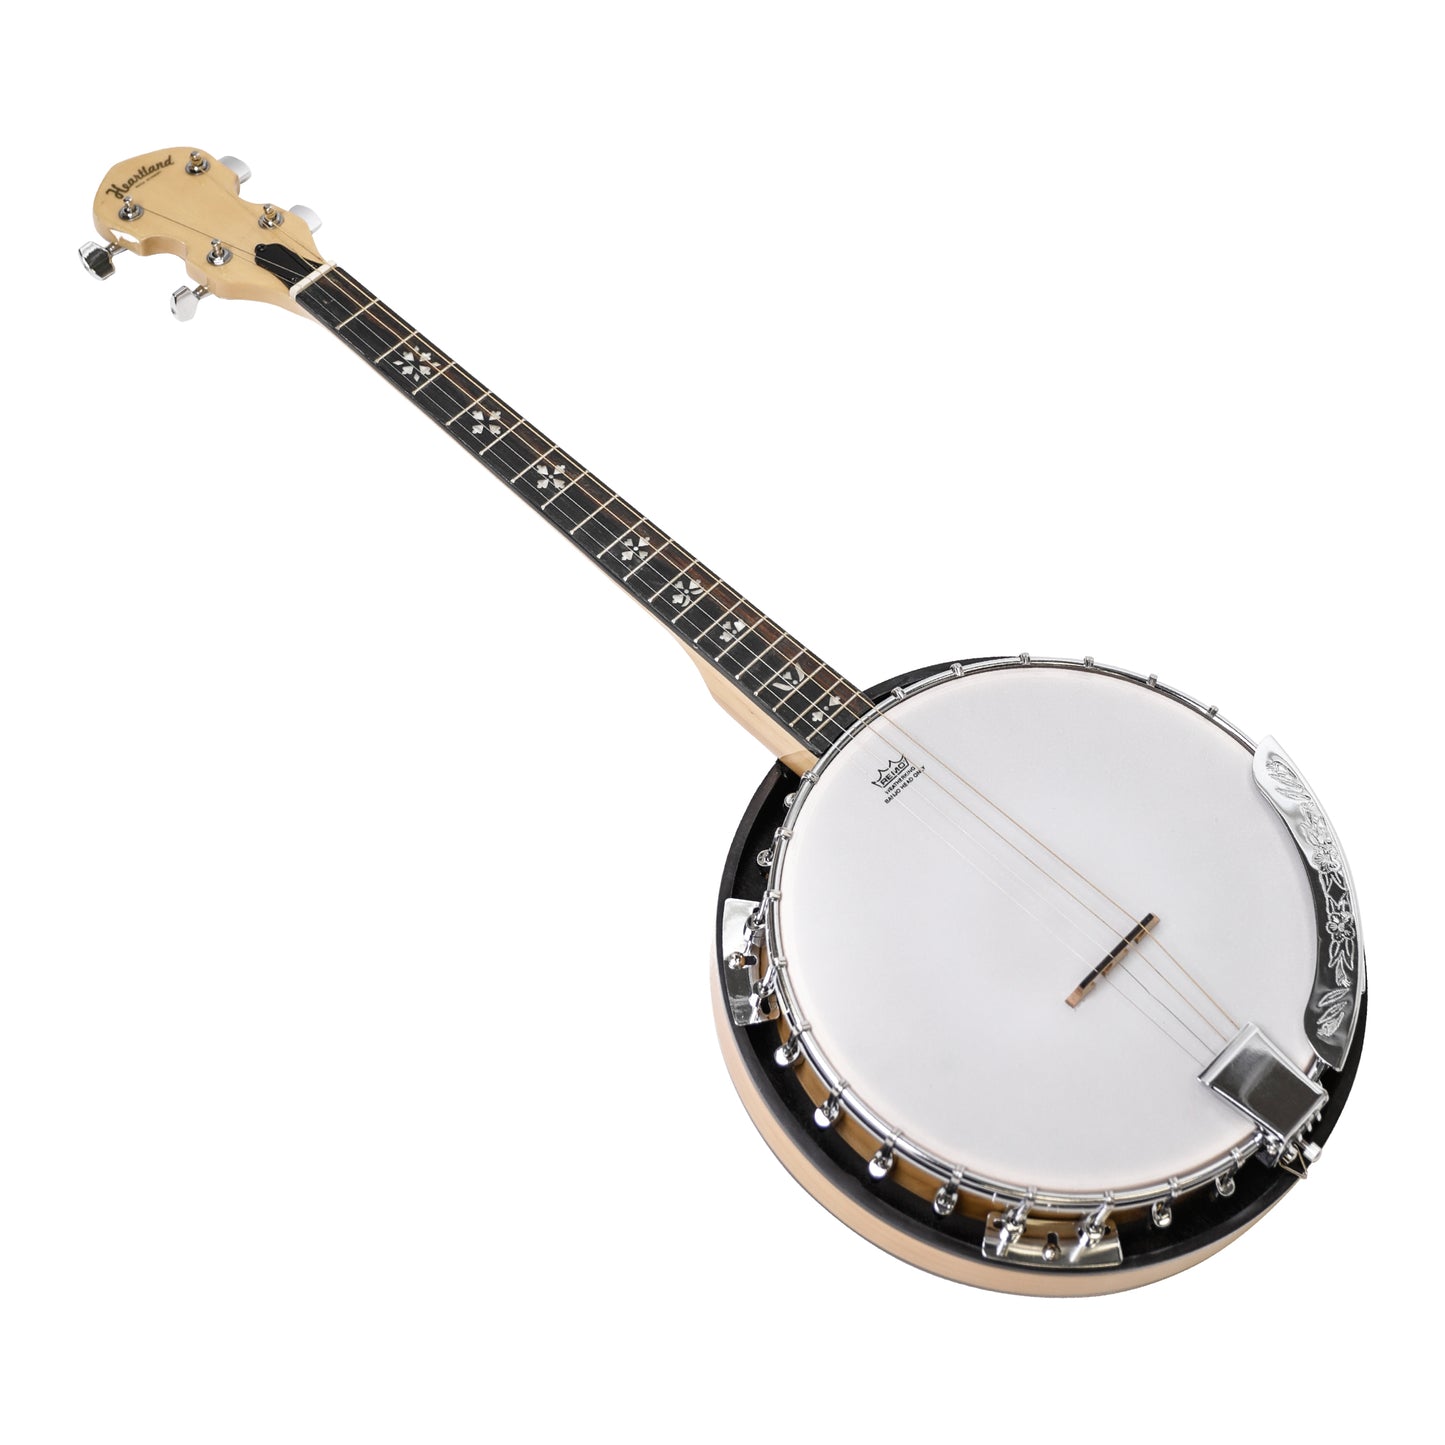 Heartland Deluxe Irish Tenor Banjo Left Handed 19 Frets 24 Bracket Closed Solid Back Maple Finish